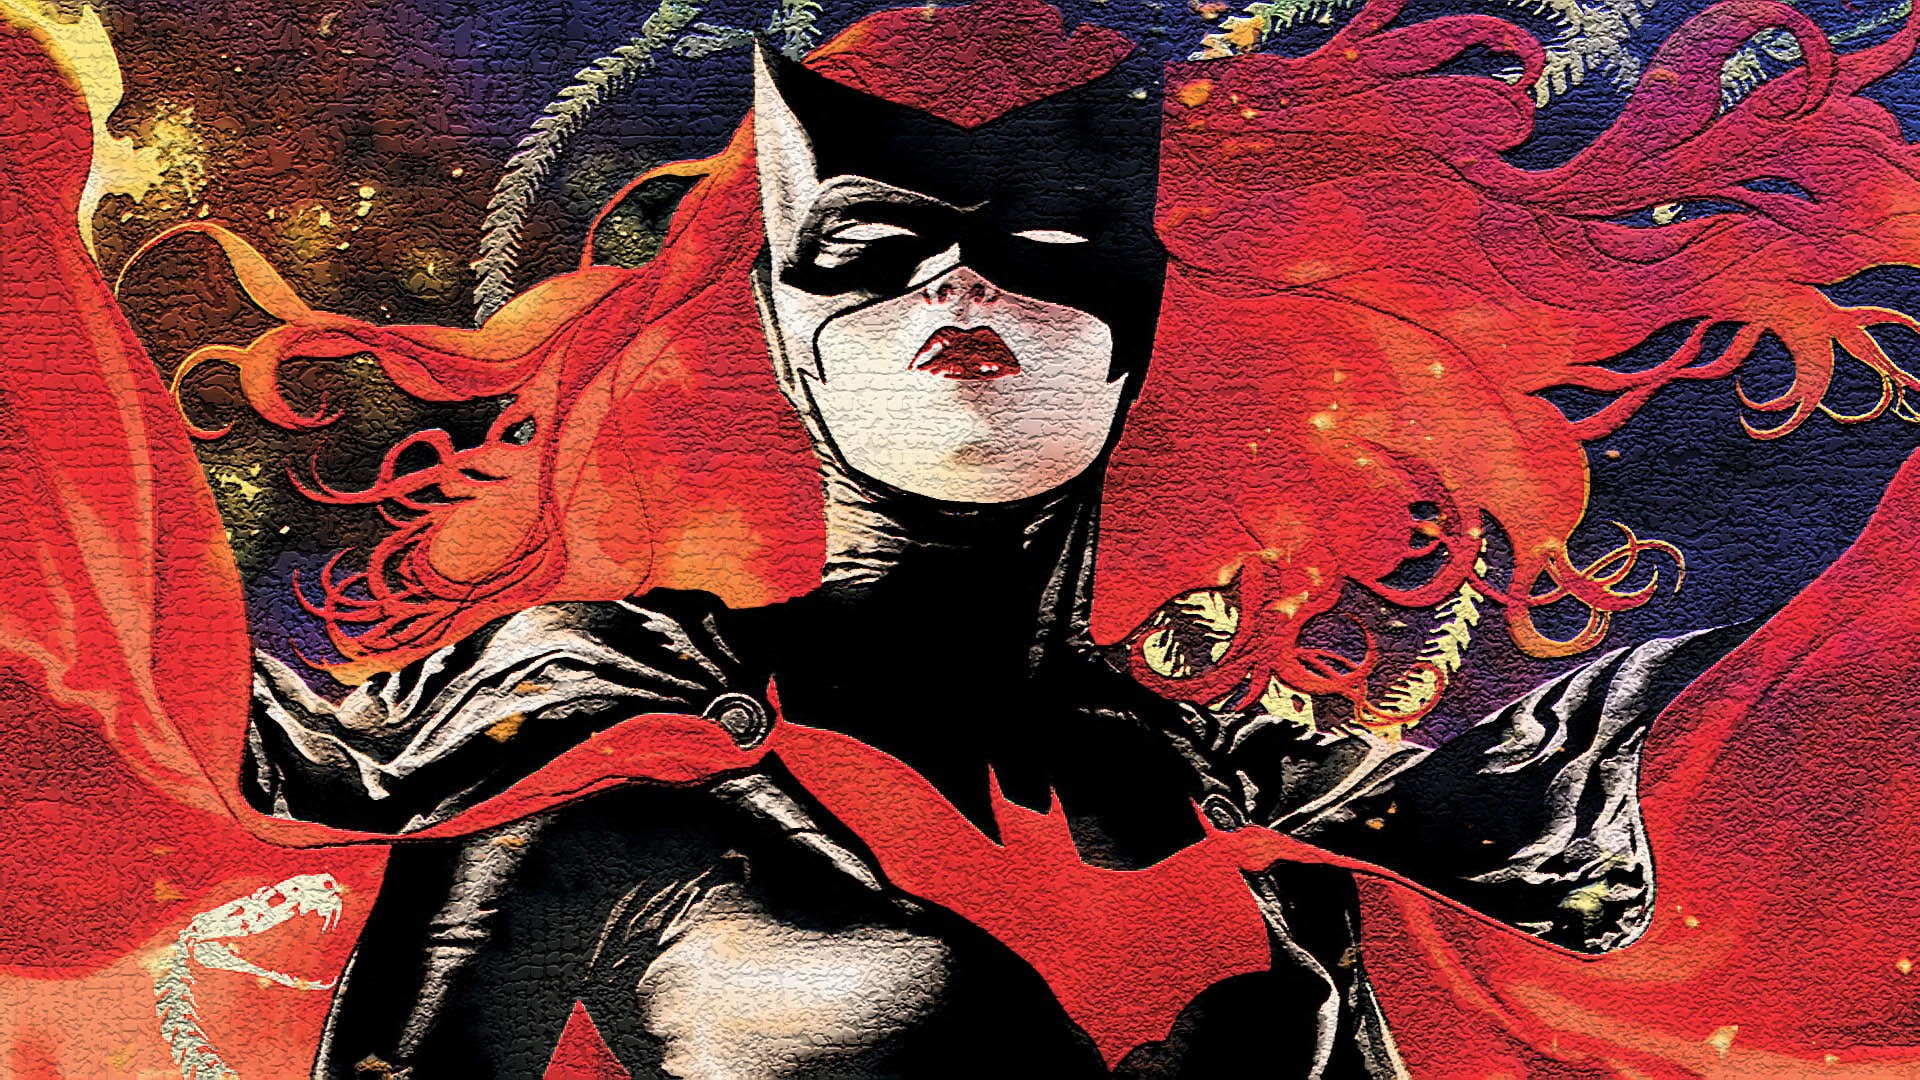 batwoman, creativity, art and craft, red, representation, pattern